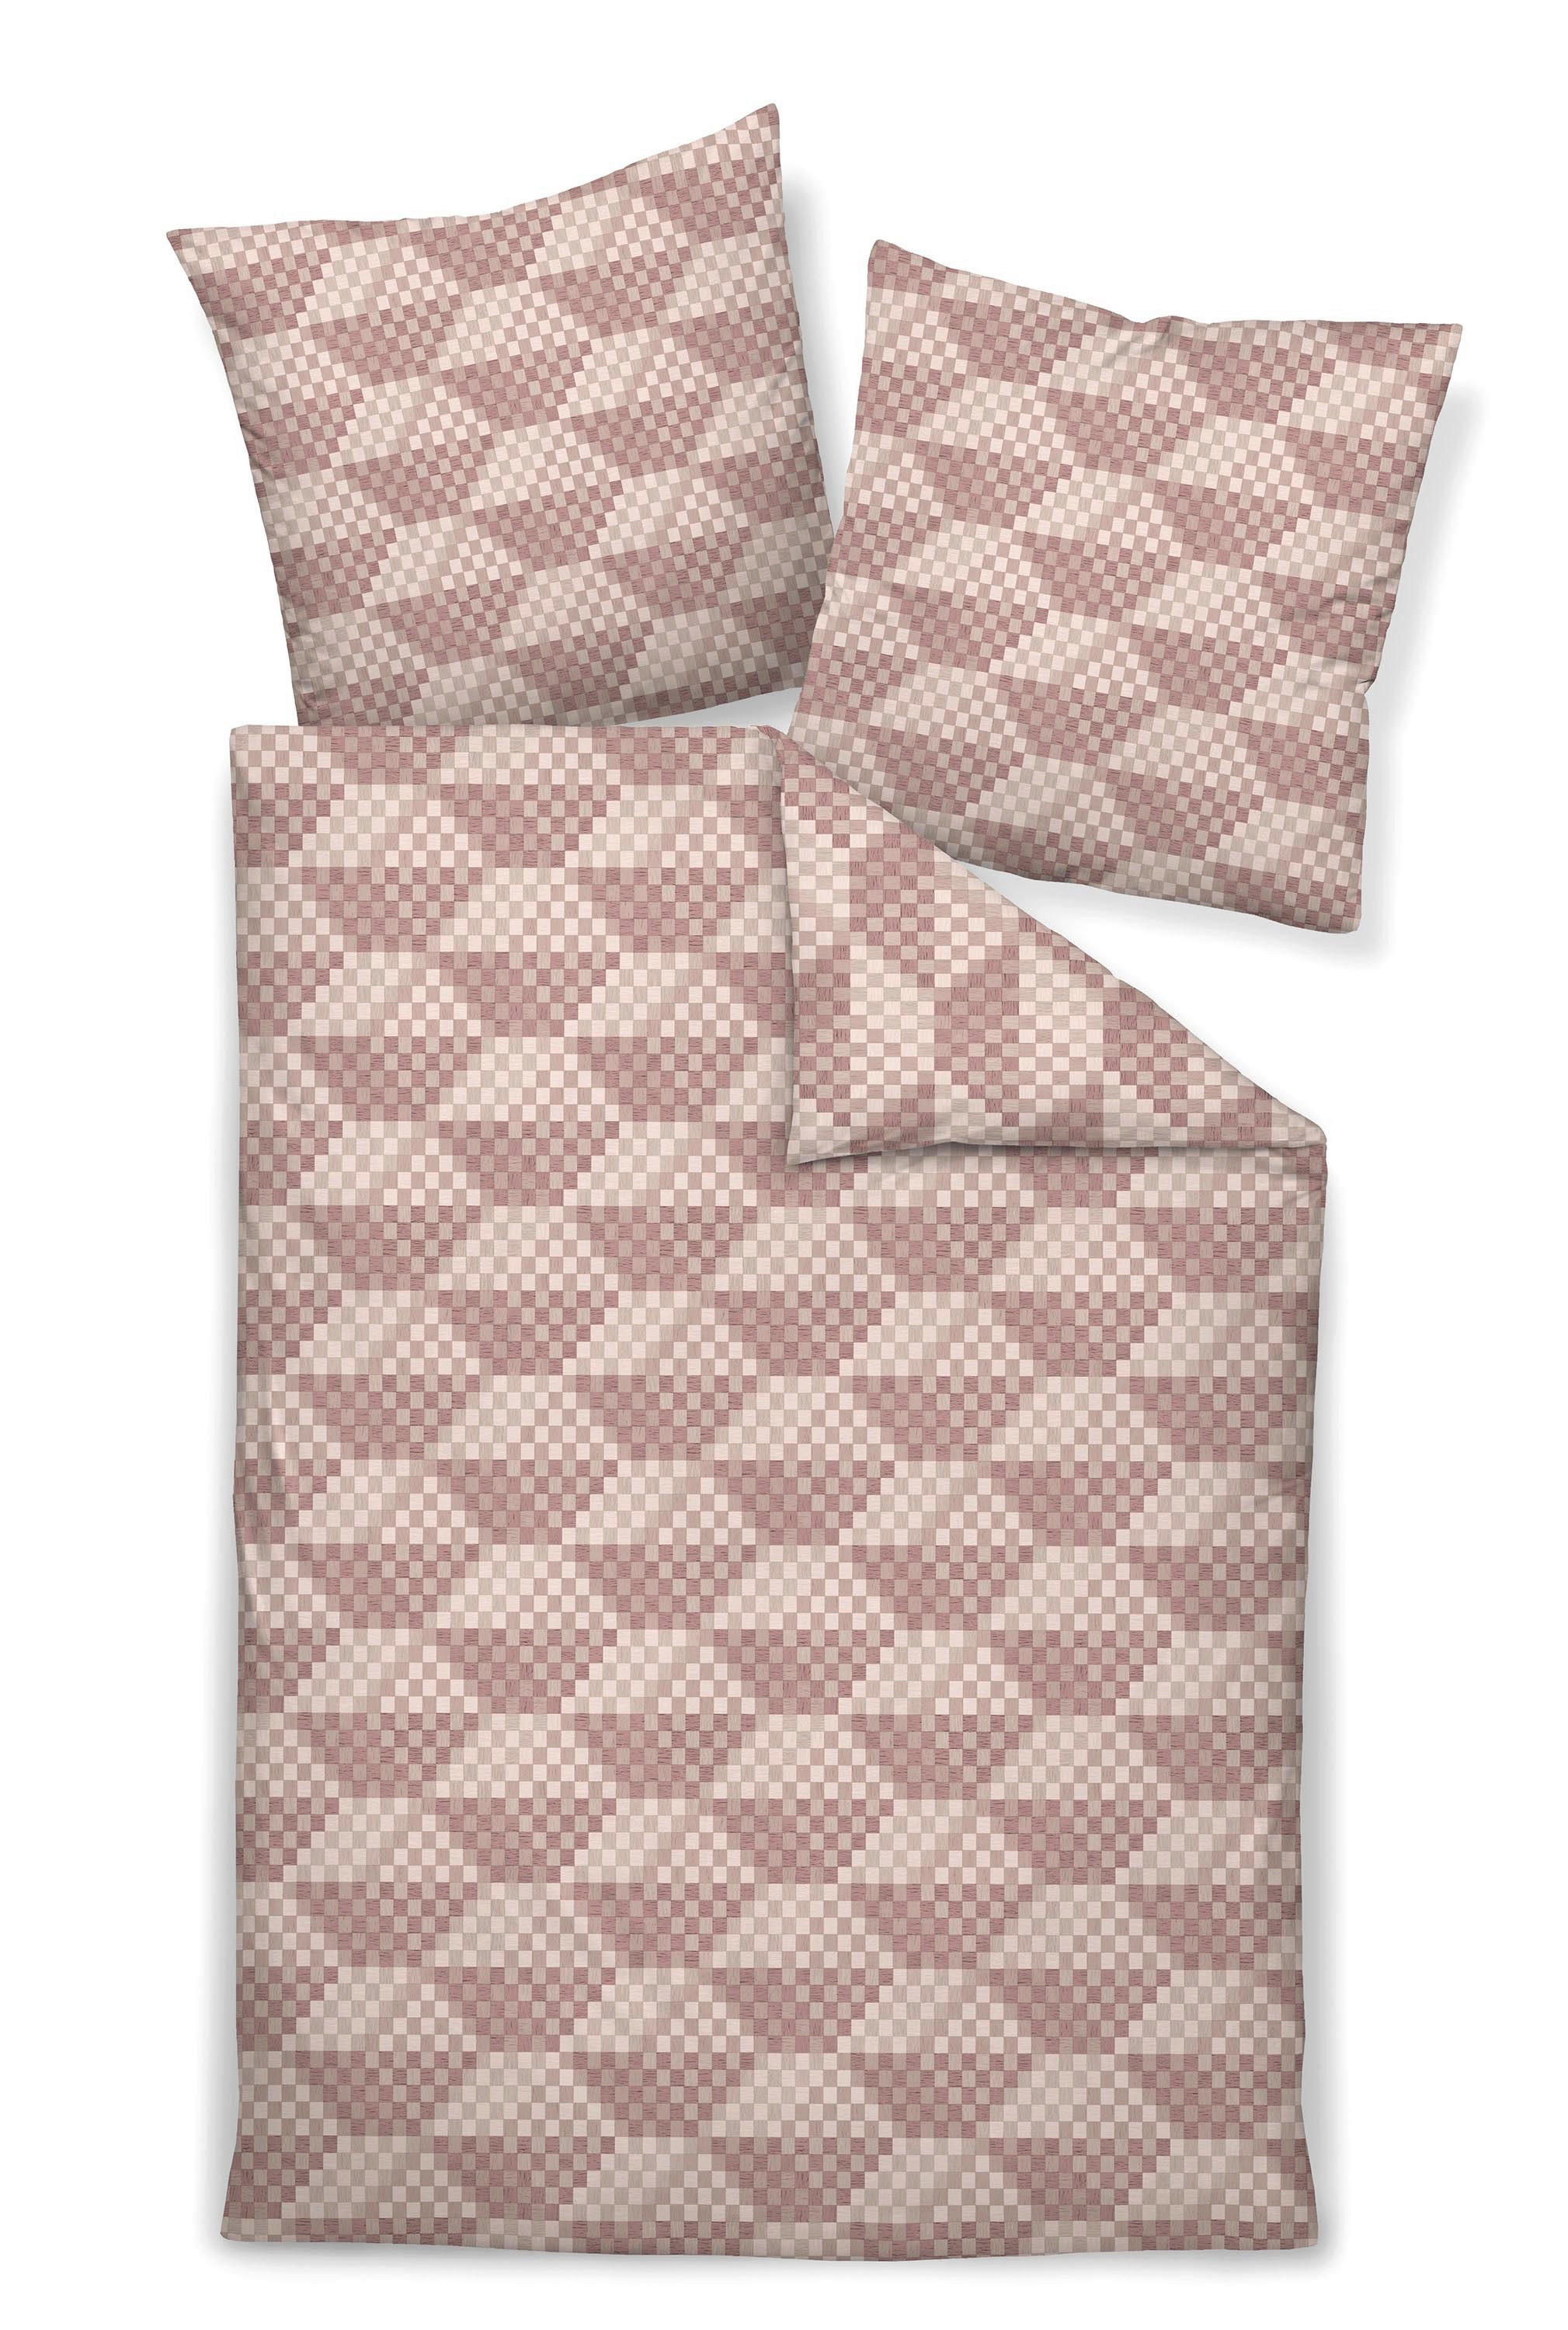 BETTWÄSCHE MILANO Makosatin  - Altrosa/Rosa, Basics, Textil (155/220cm) - Janine